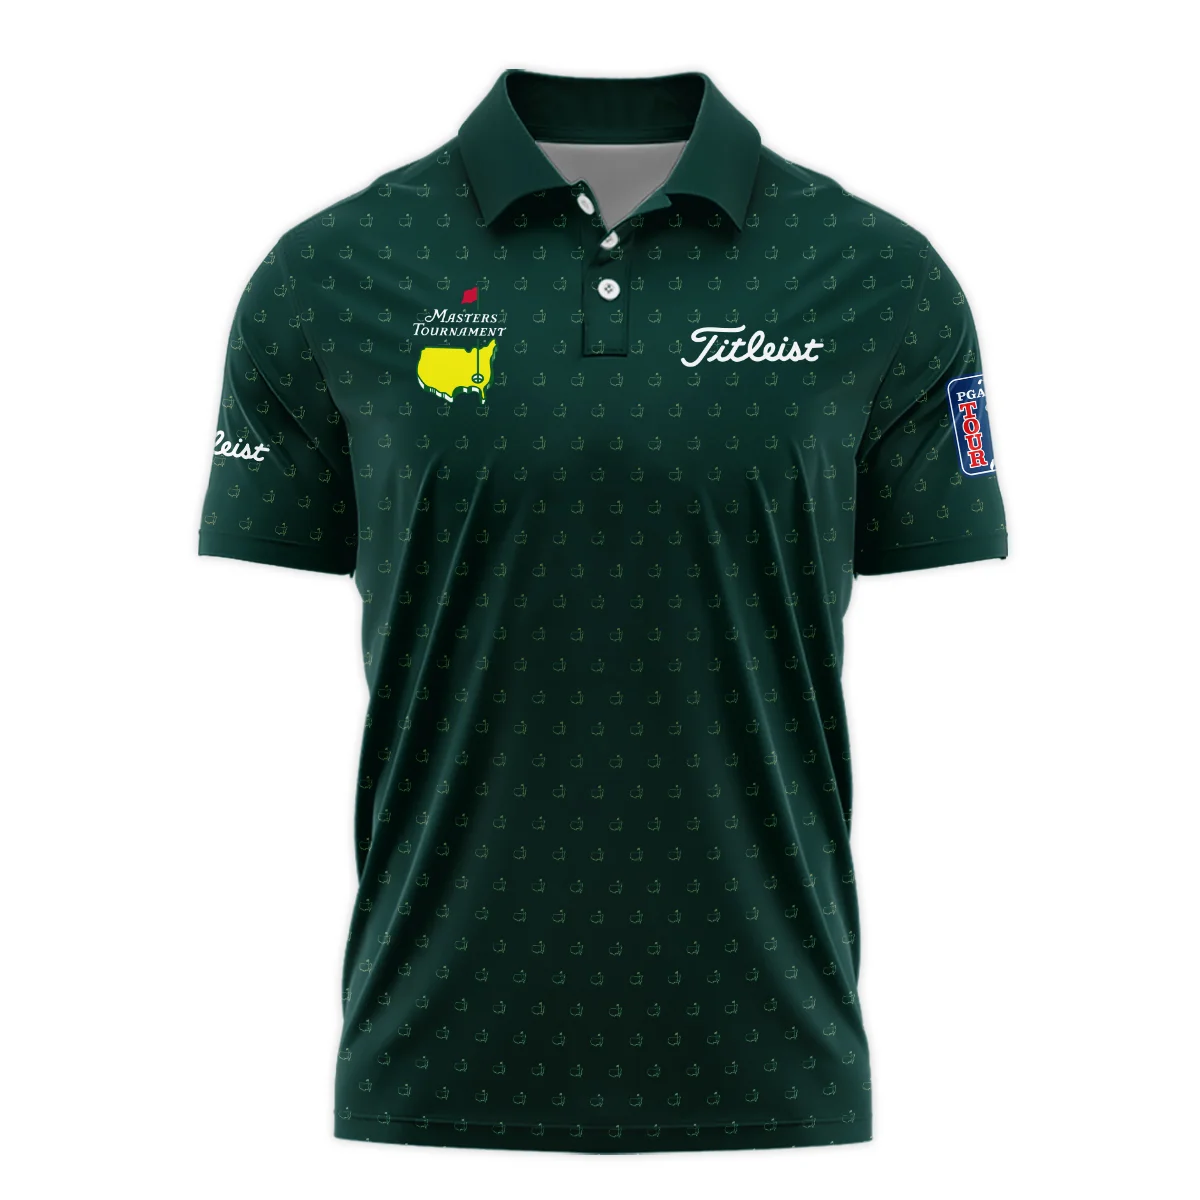 Golf Masters Tournament Titleist Bomber Jacket Logo Pattern Gold Green Golf Sports All Over Print Bomber Jacket